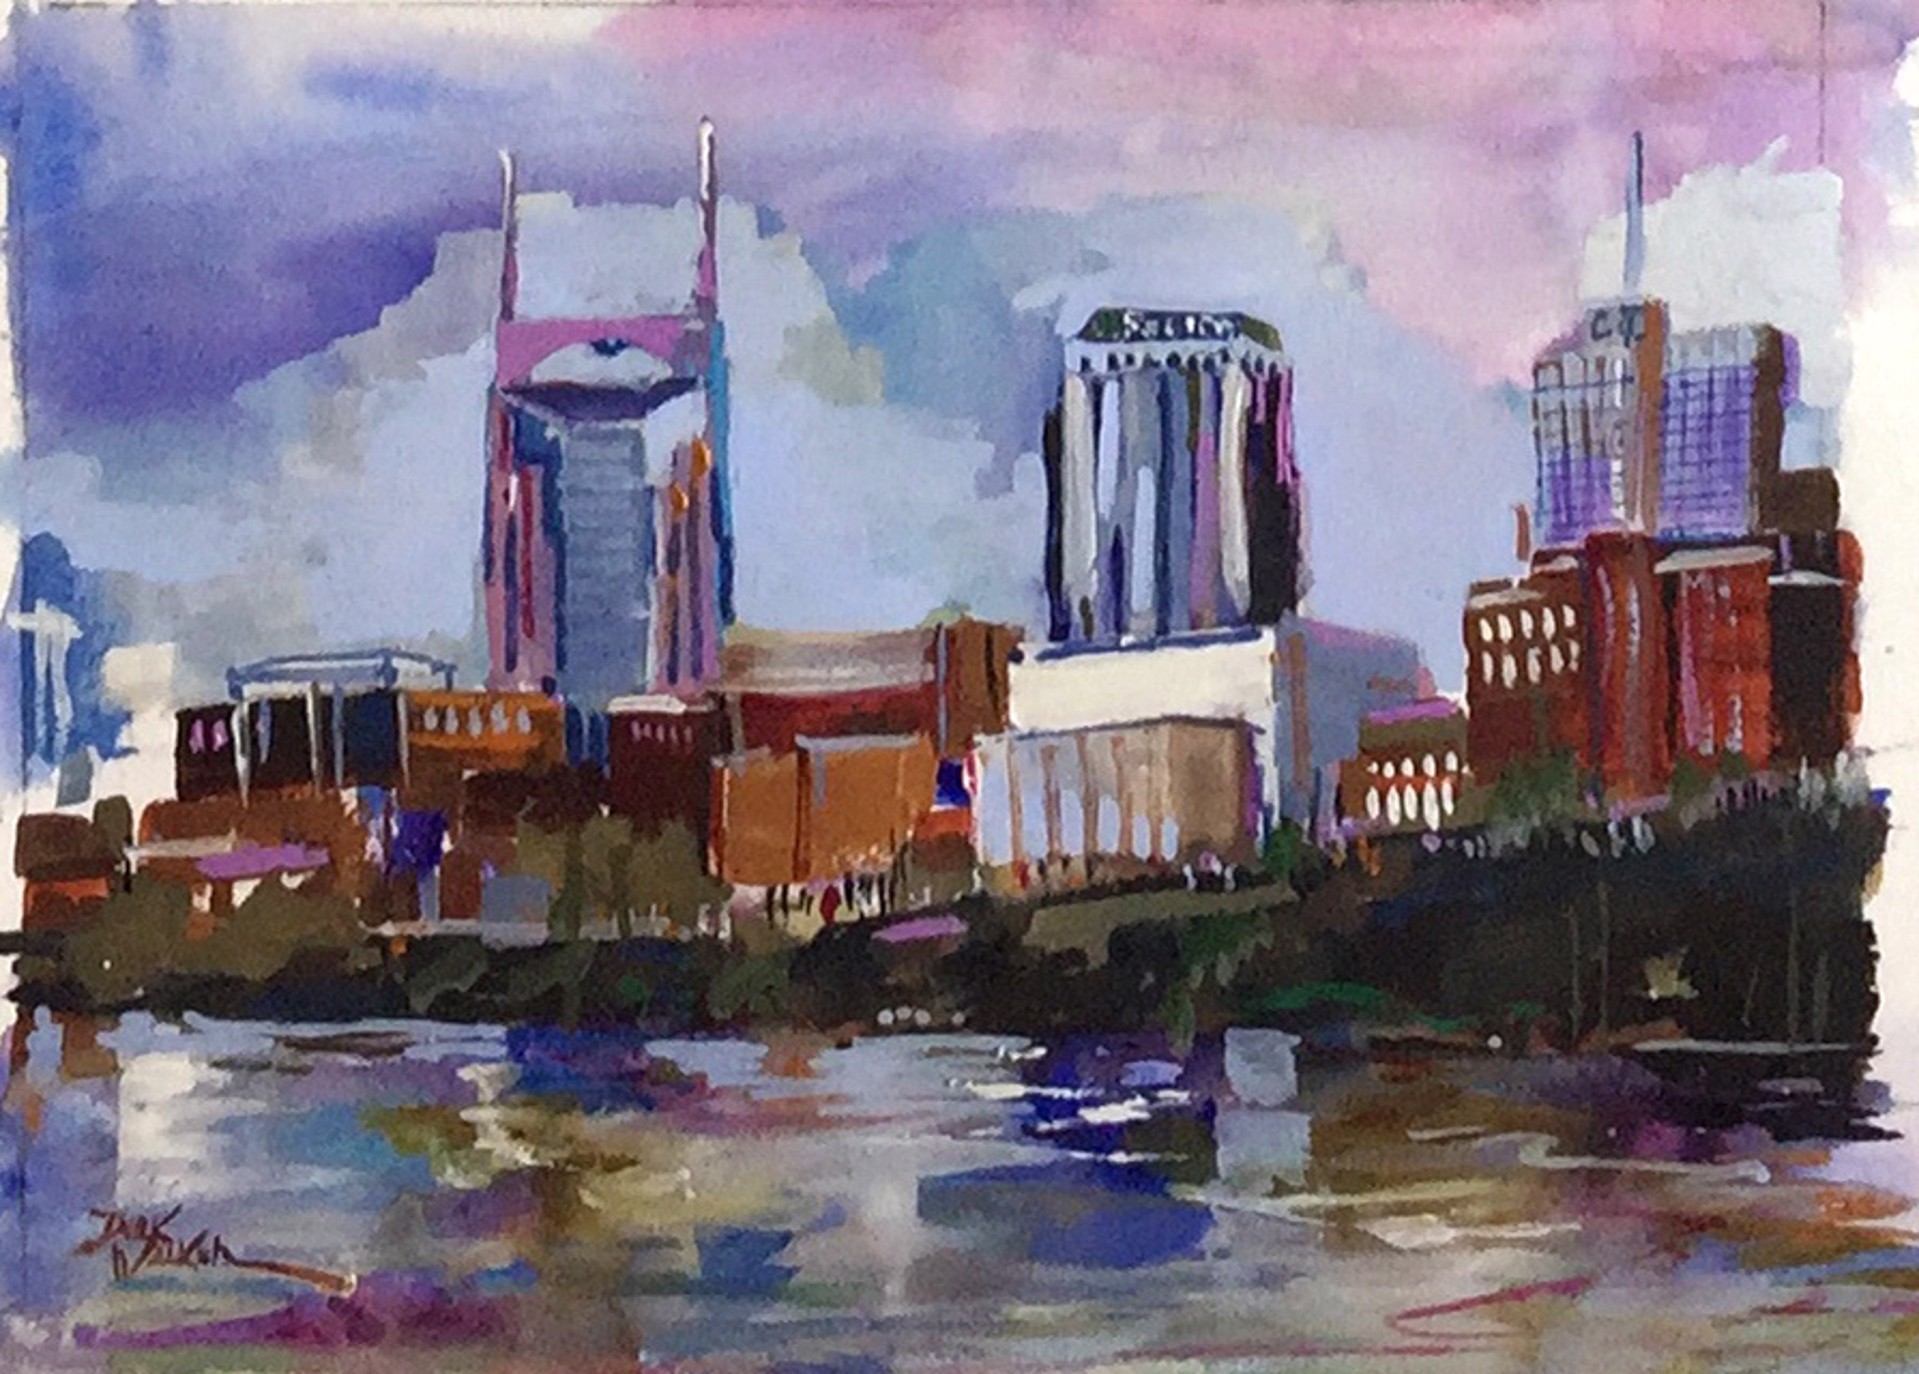 Regions Commission - Nashville by Dirk Walker